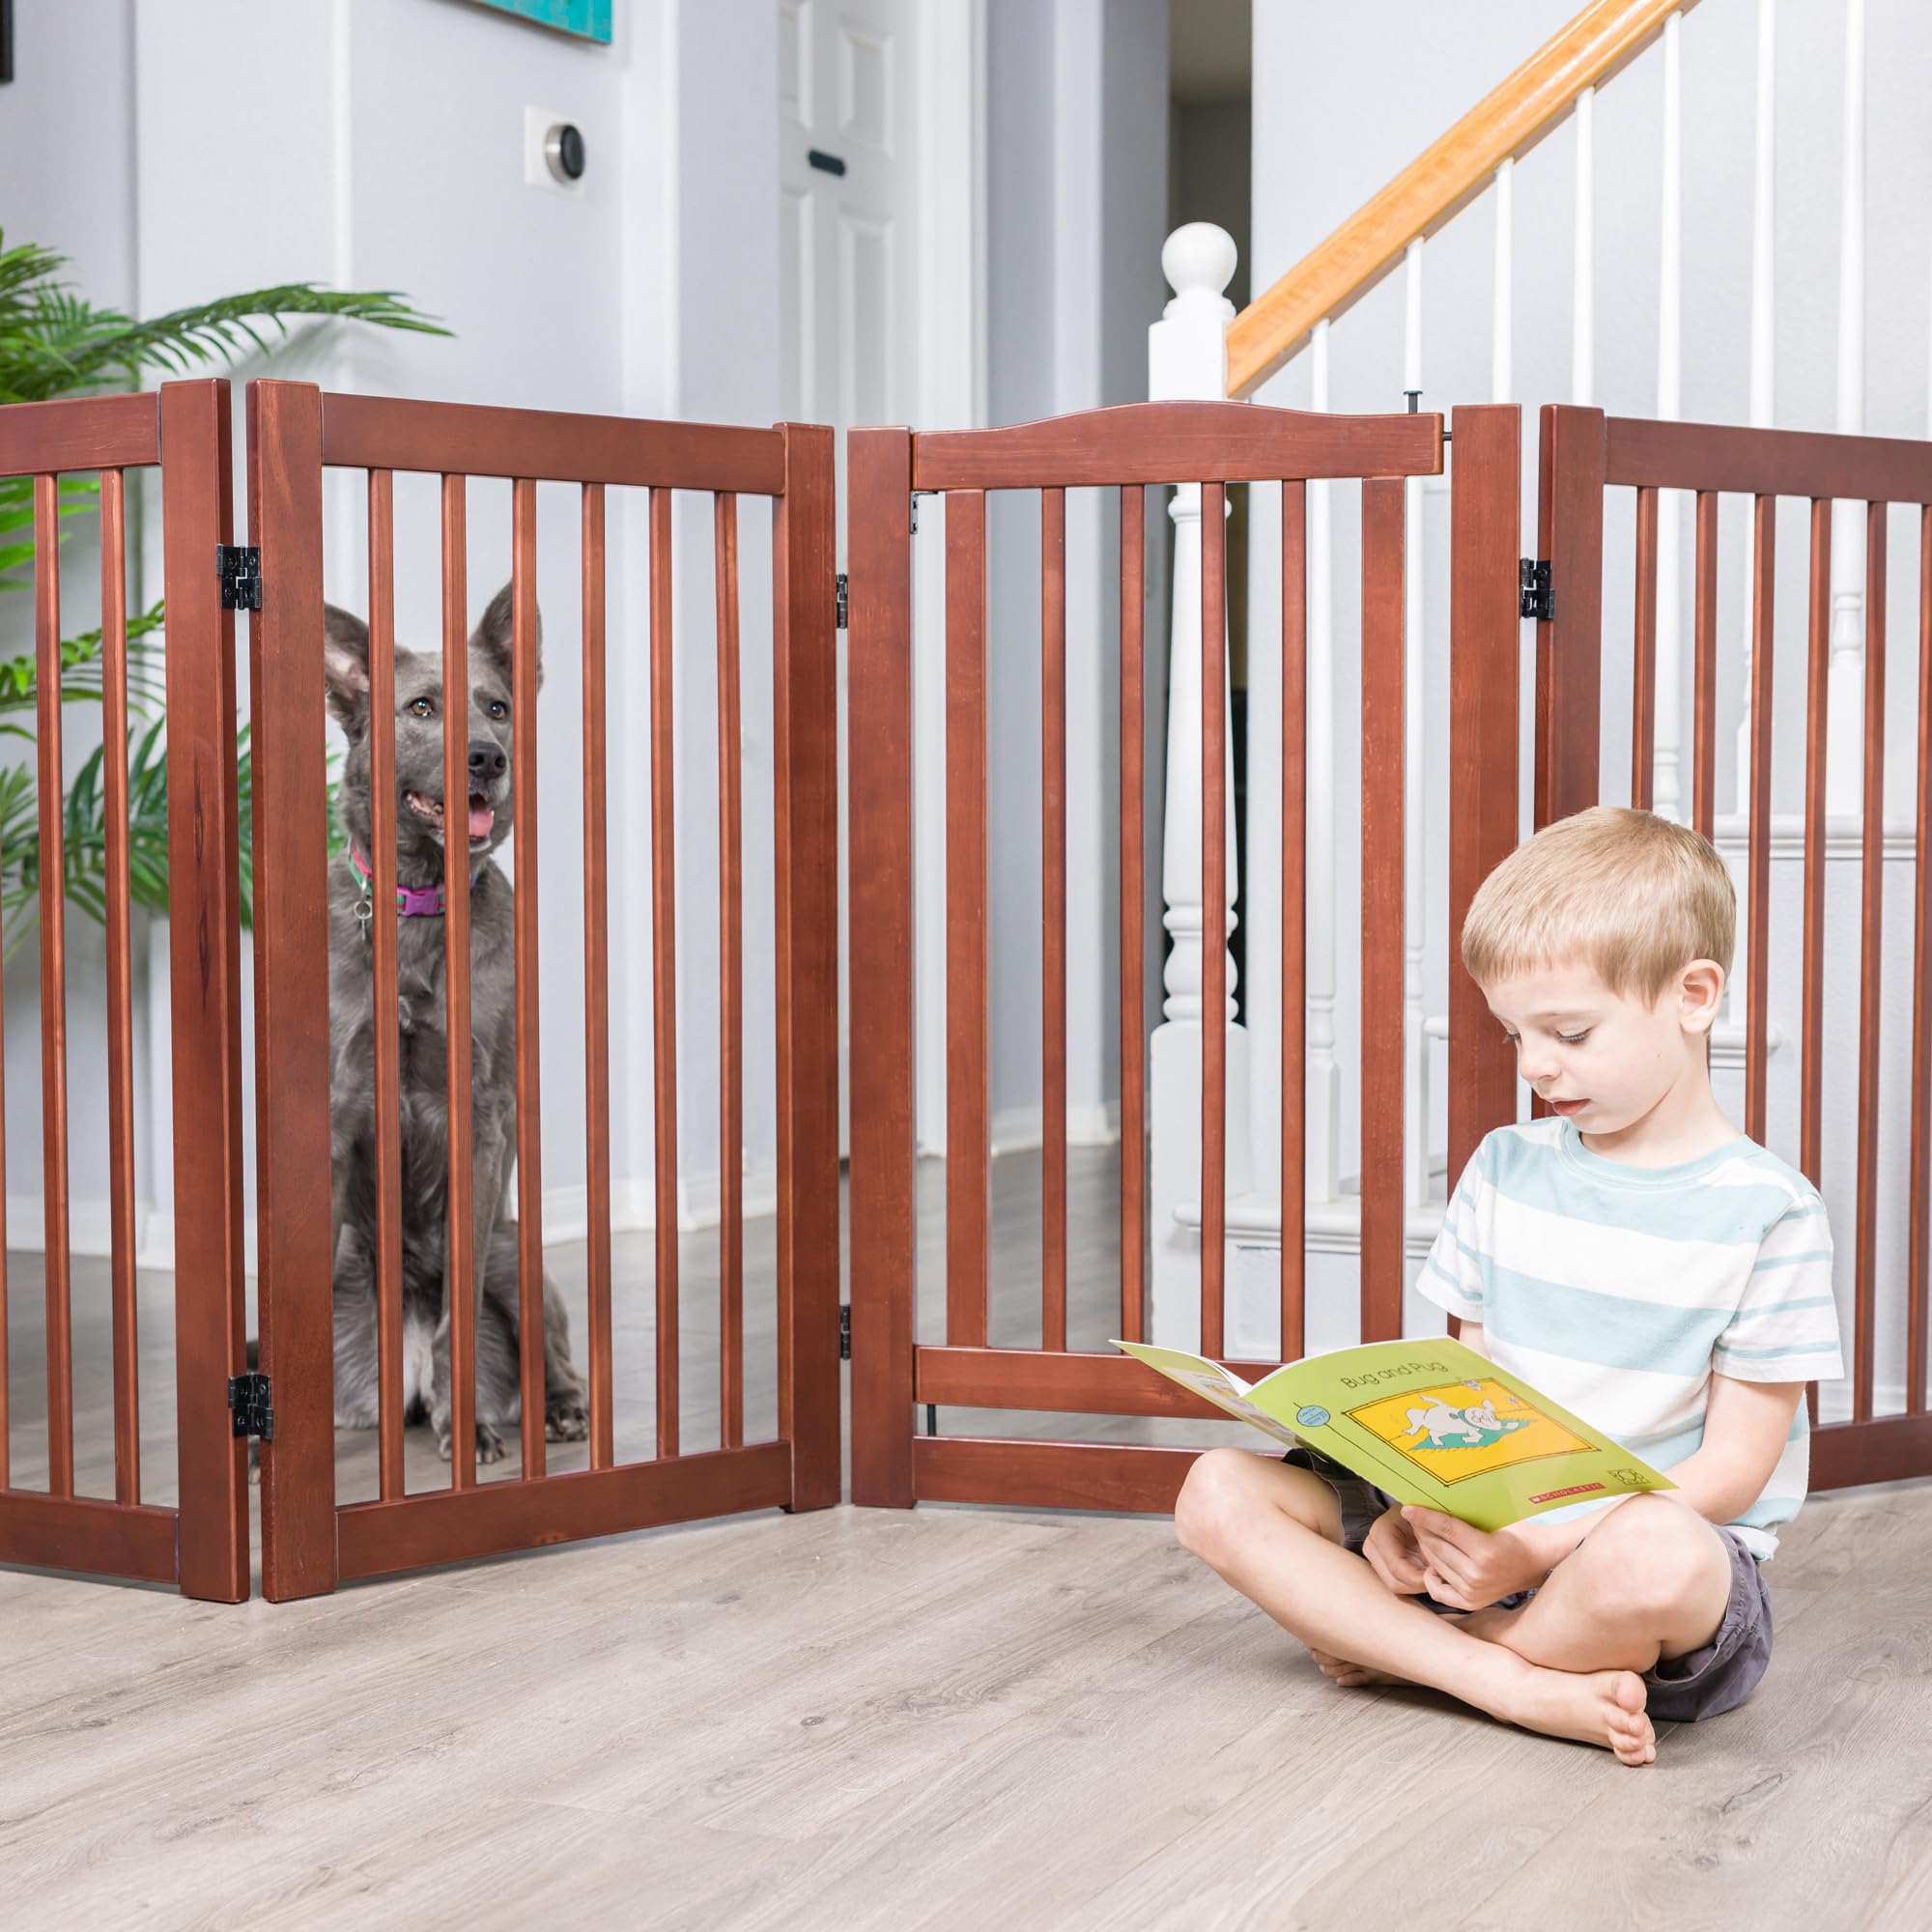 Primetime Petz 360 Configurable Freestanding Dog Gate with Door for Home